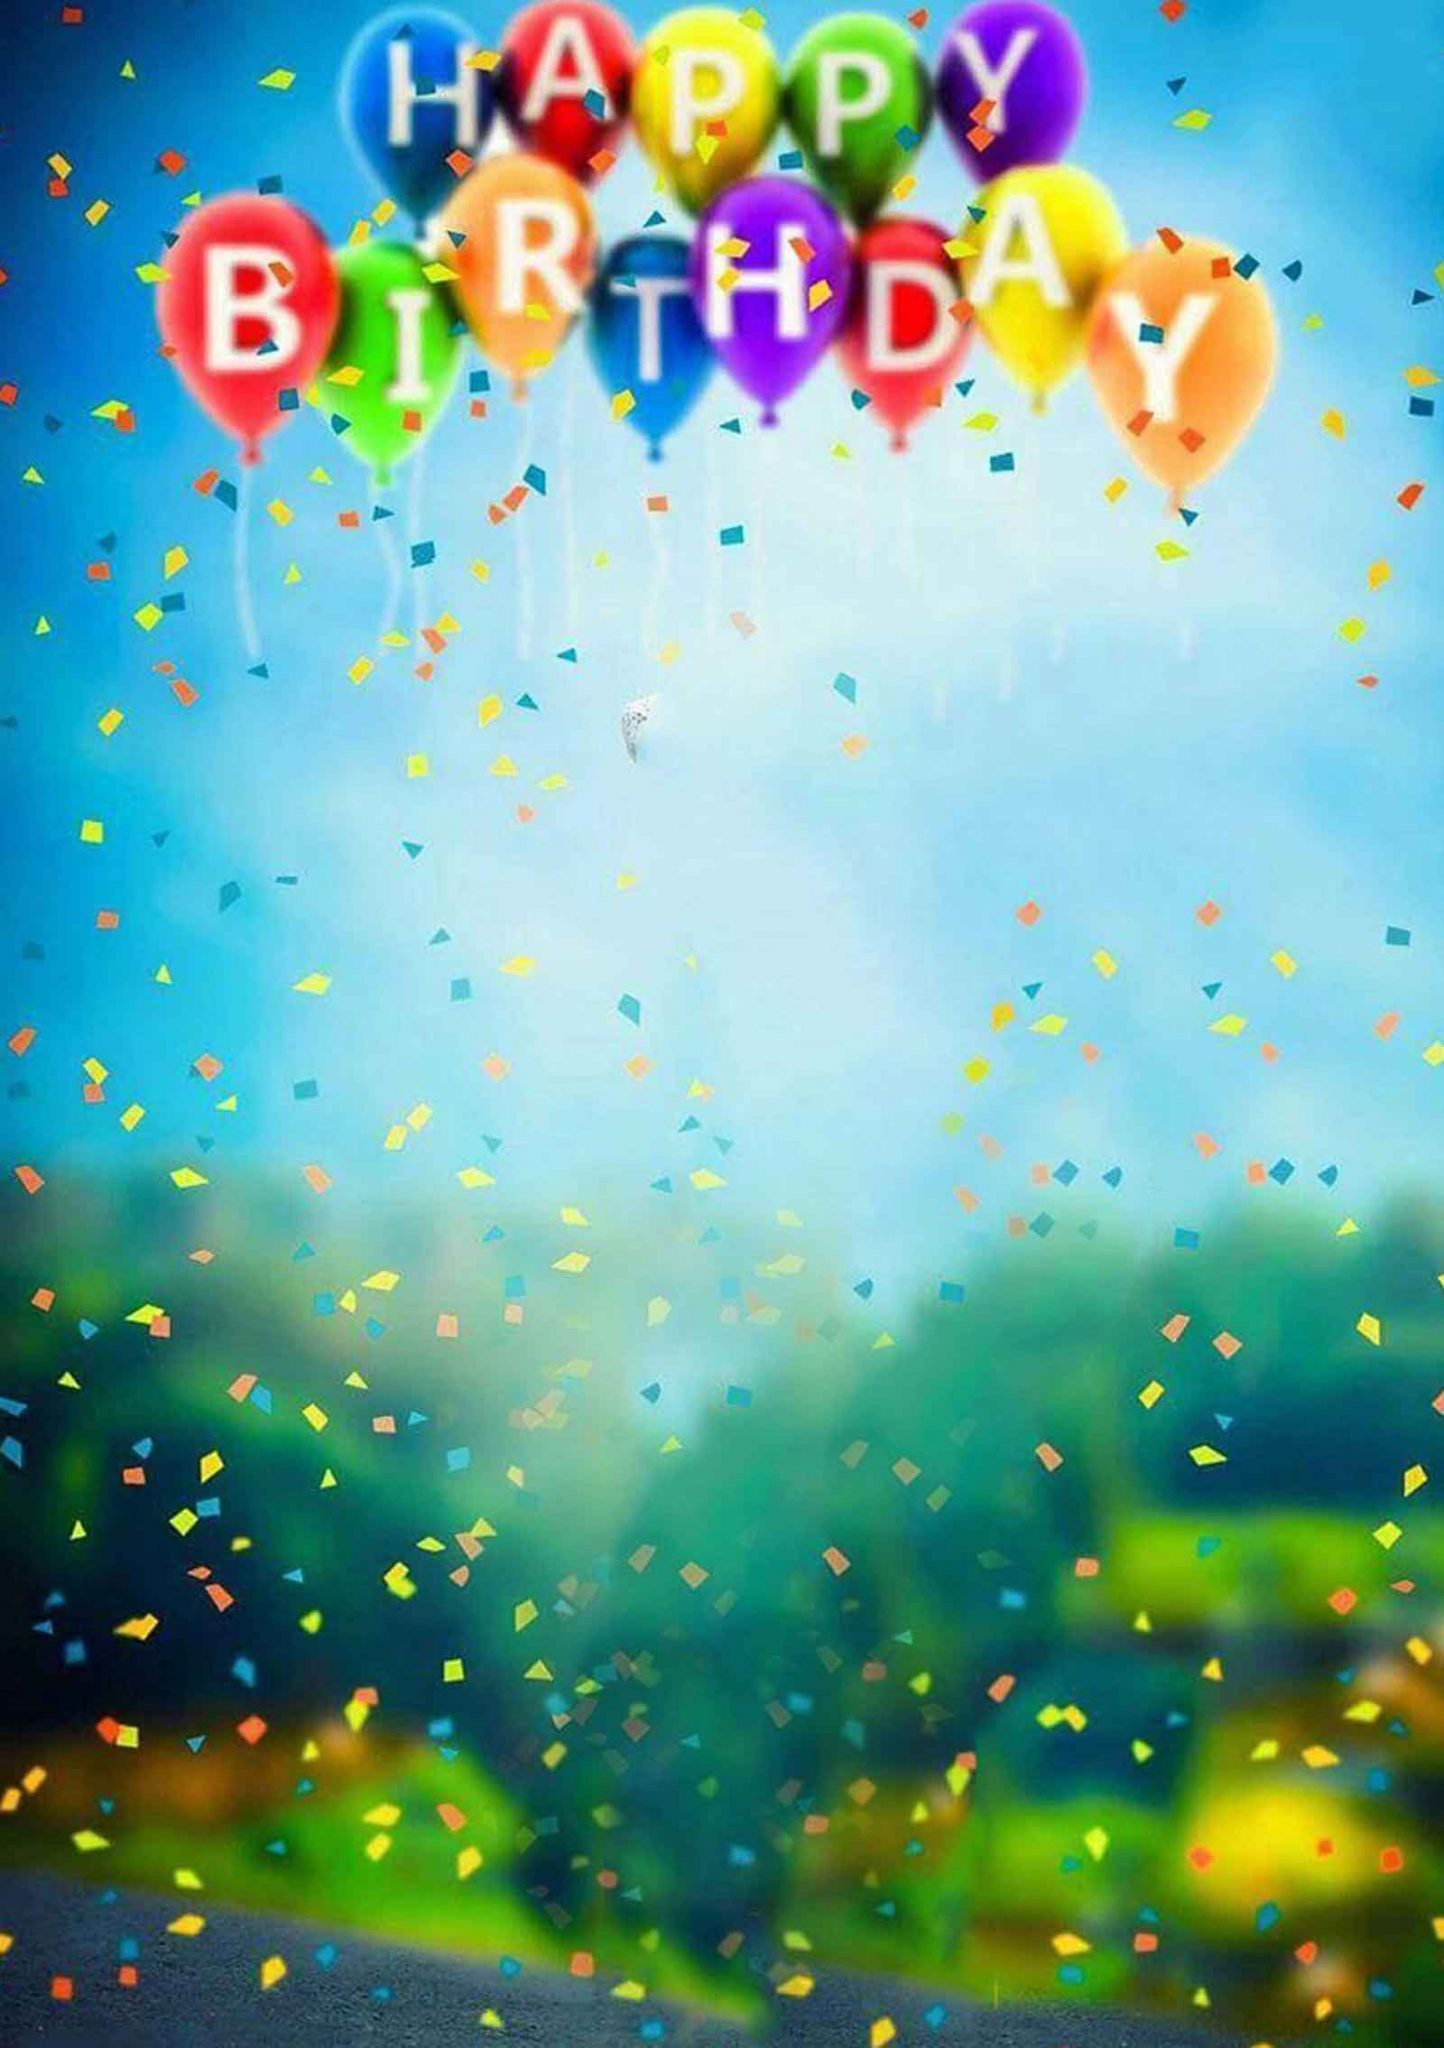 Happy Birthday Background Free Stock Image Download